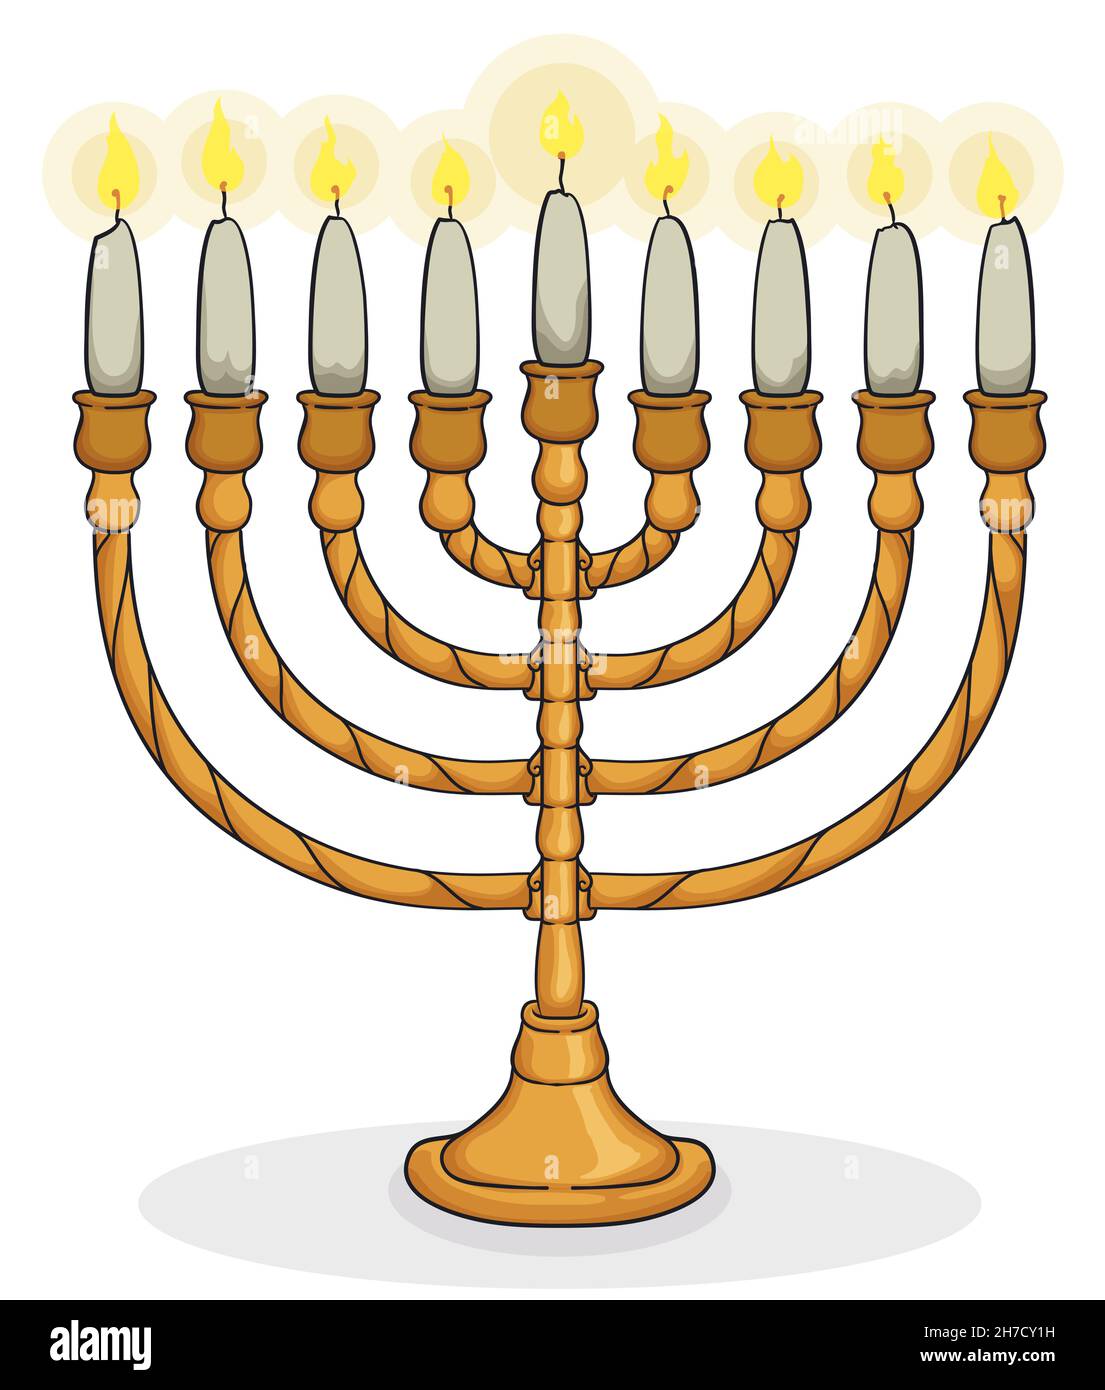 Lighted chanukiah with all its nine candles illuminated, ready for Hanukkah celebration. Design in cartoon style. Stock Vector